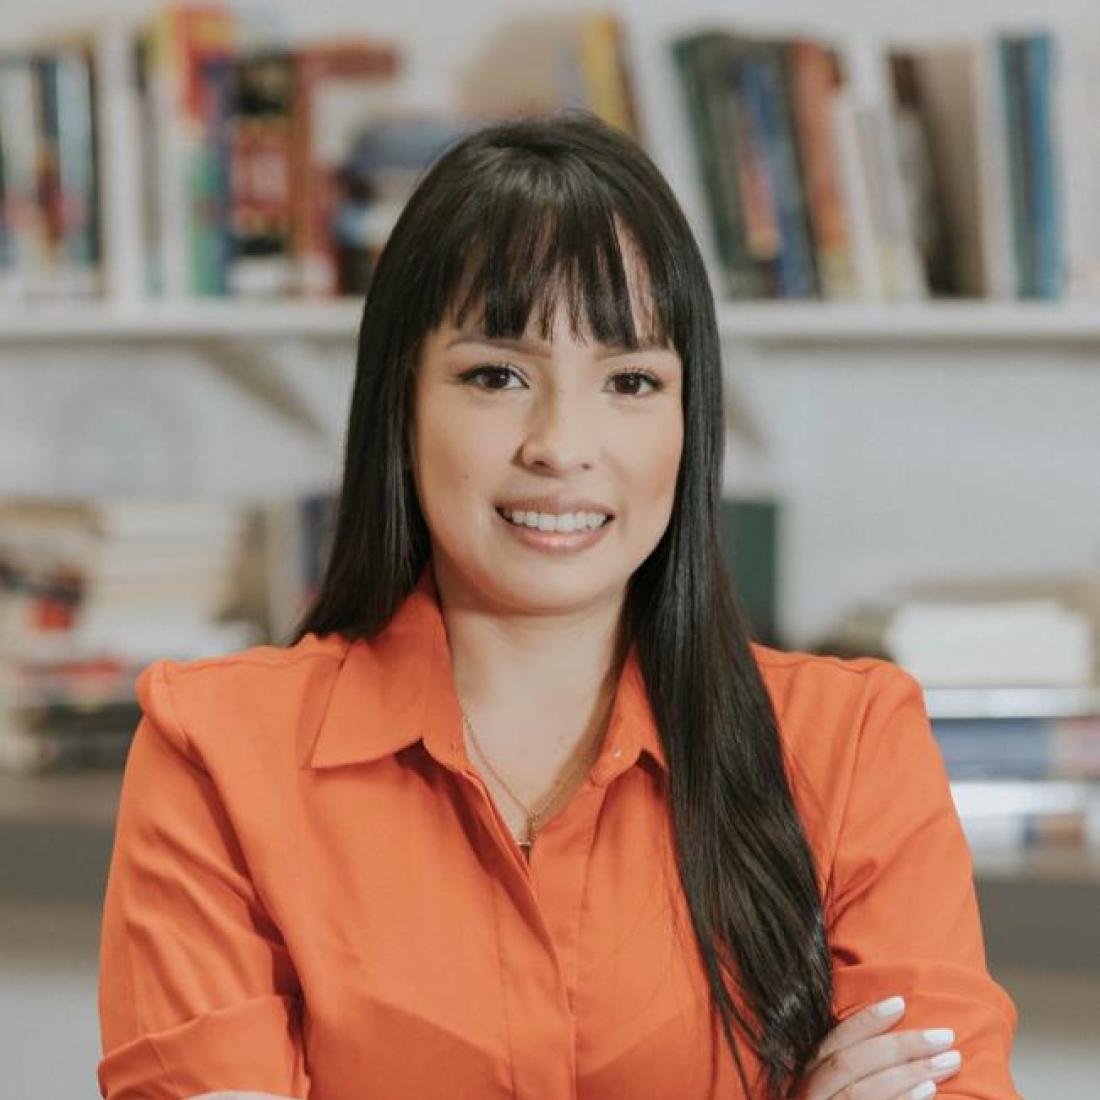 Tatiana Ortiz standing in front of a bookshelf smiling